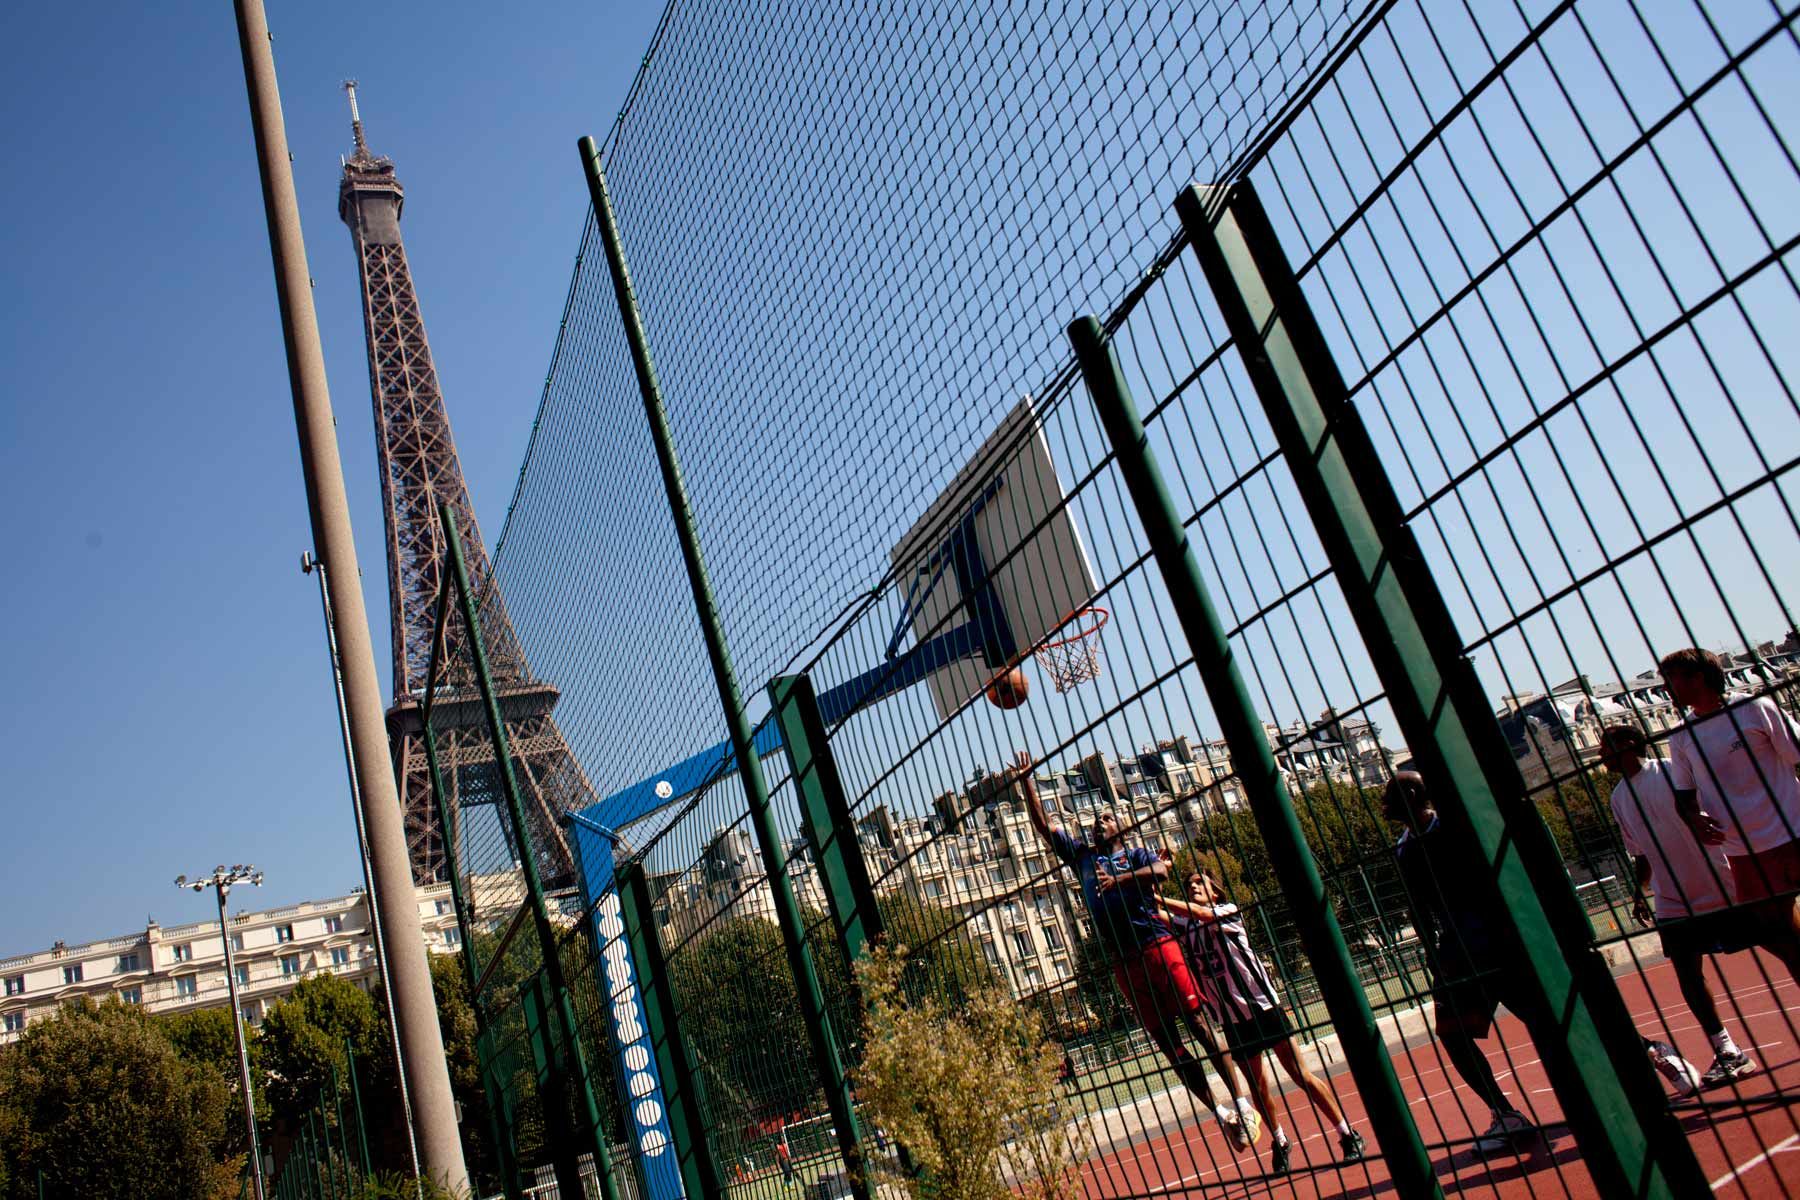 Pickup-basketball-Paris-Eiffel-Tower.jpg